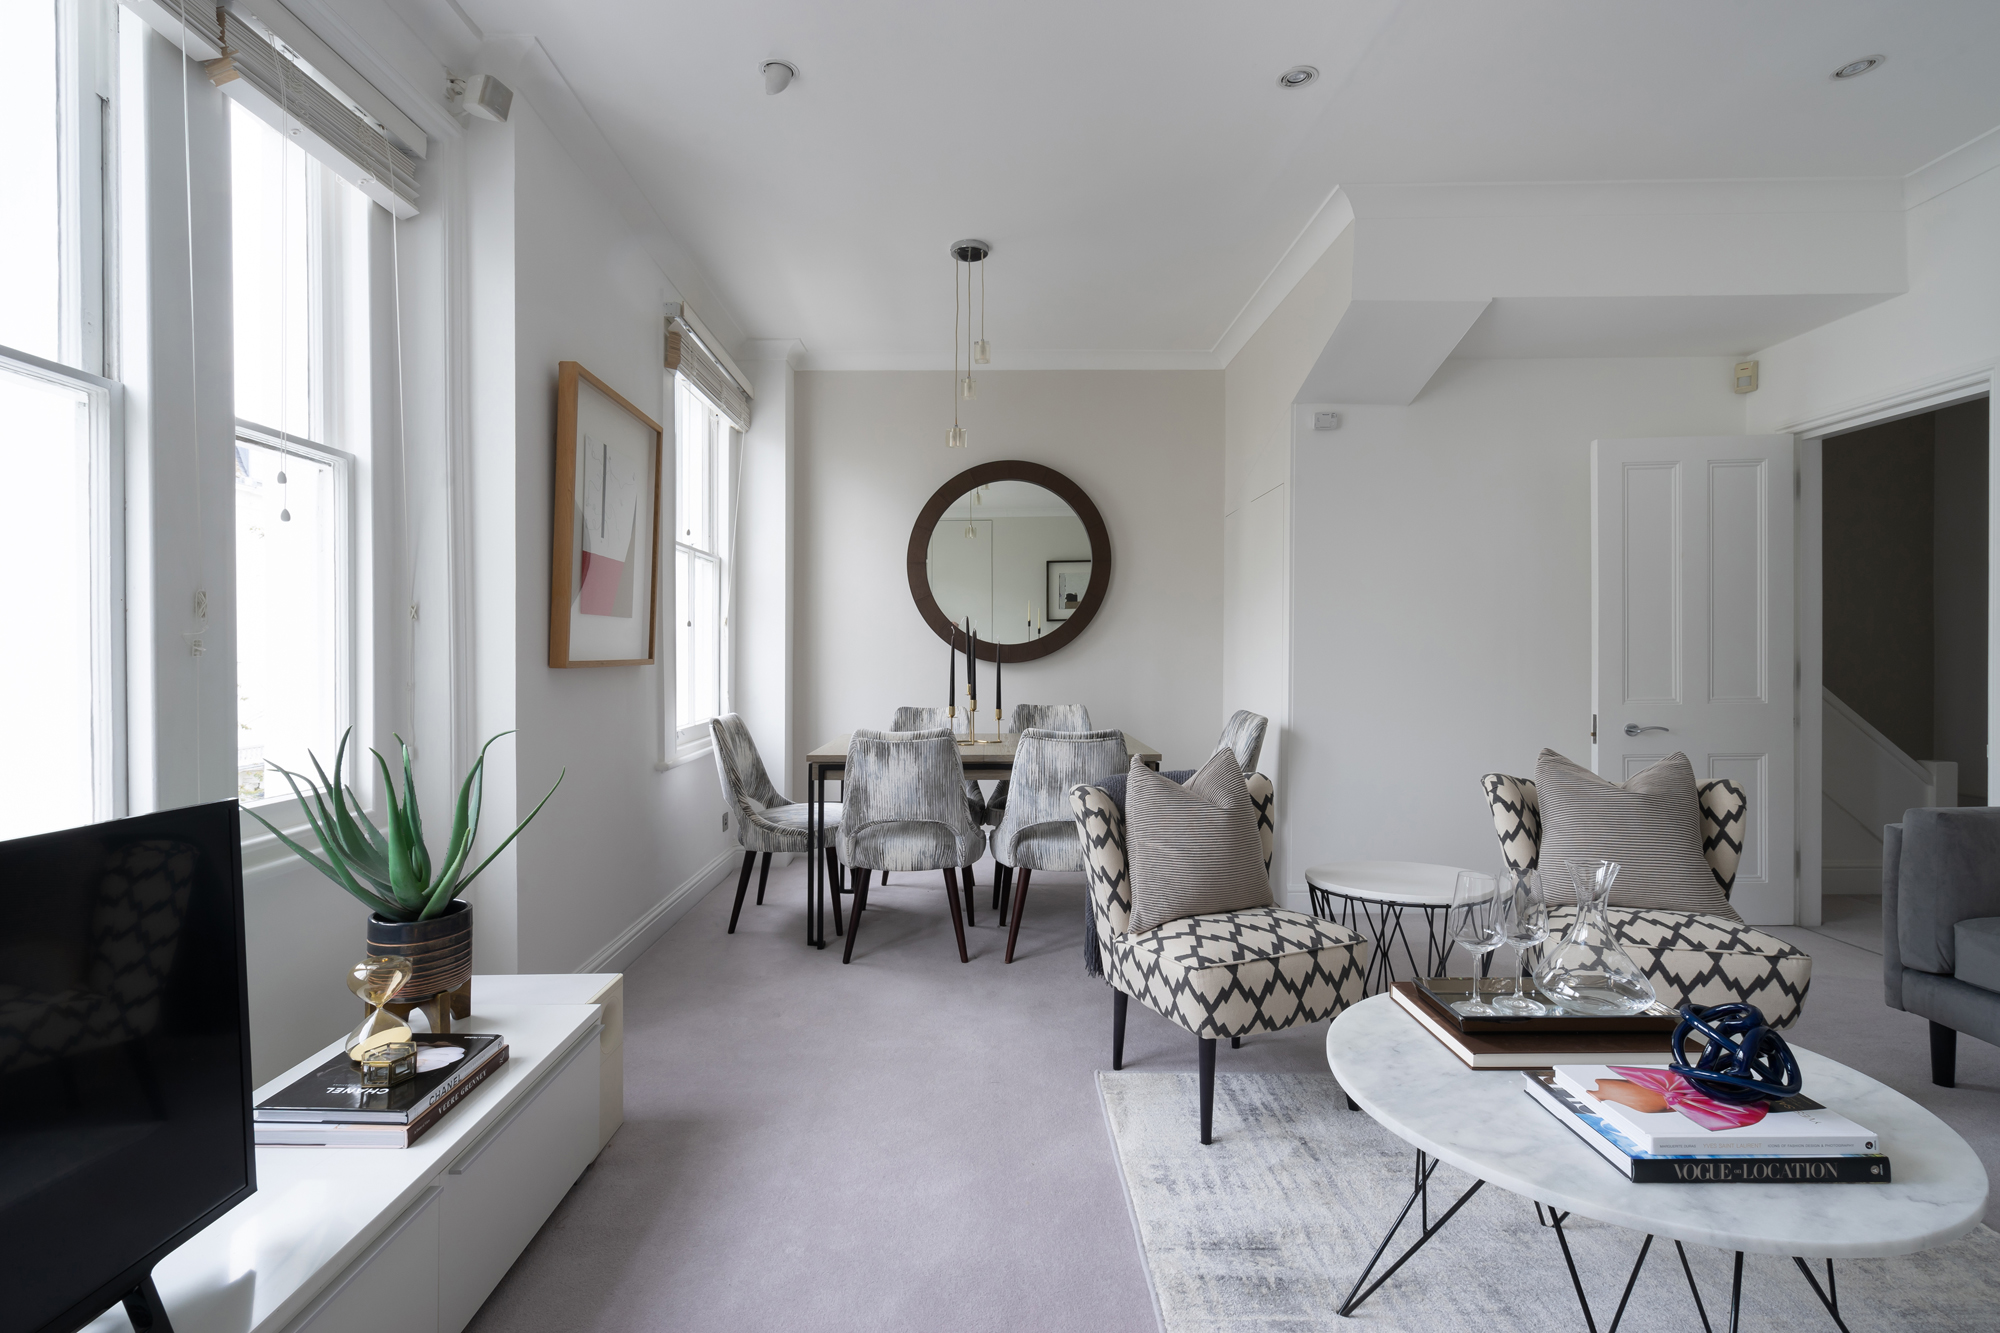 For Sale: Palace Gardens Terrace Kensington W8 heritage reception room with elegant interior design